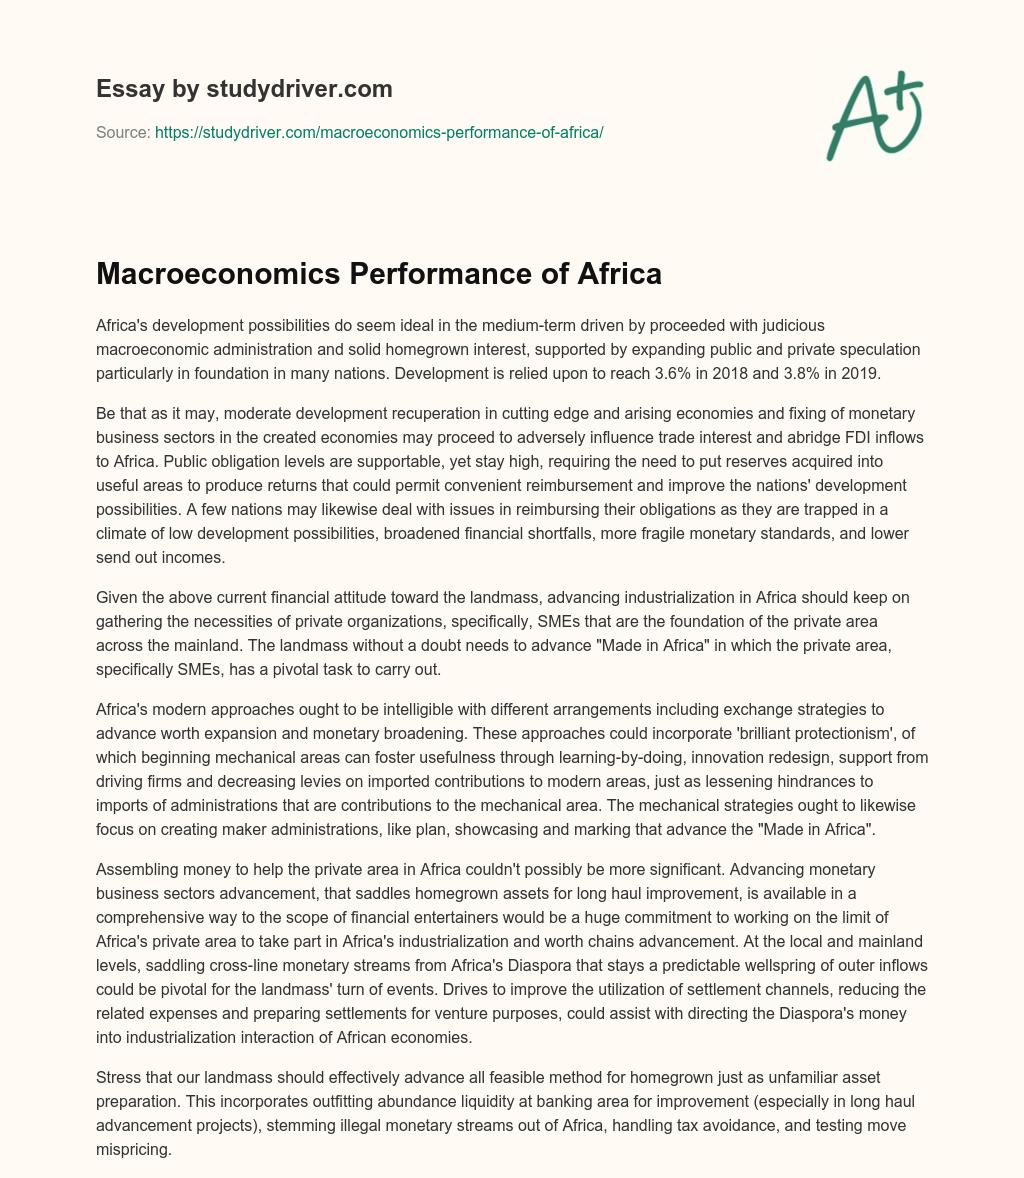 Macroeconomics Performance of Africa essay